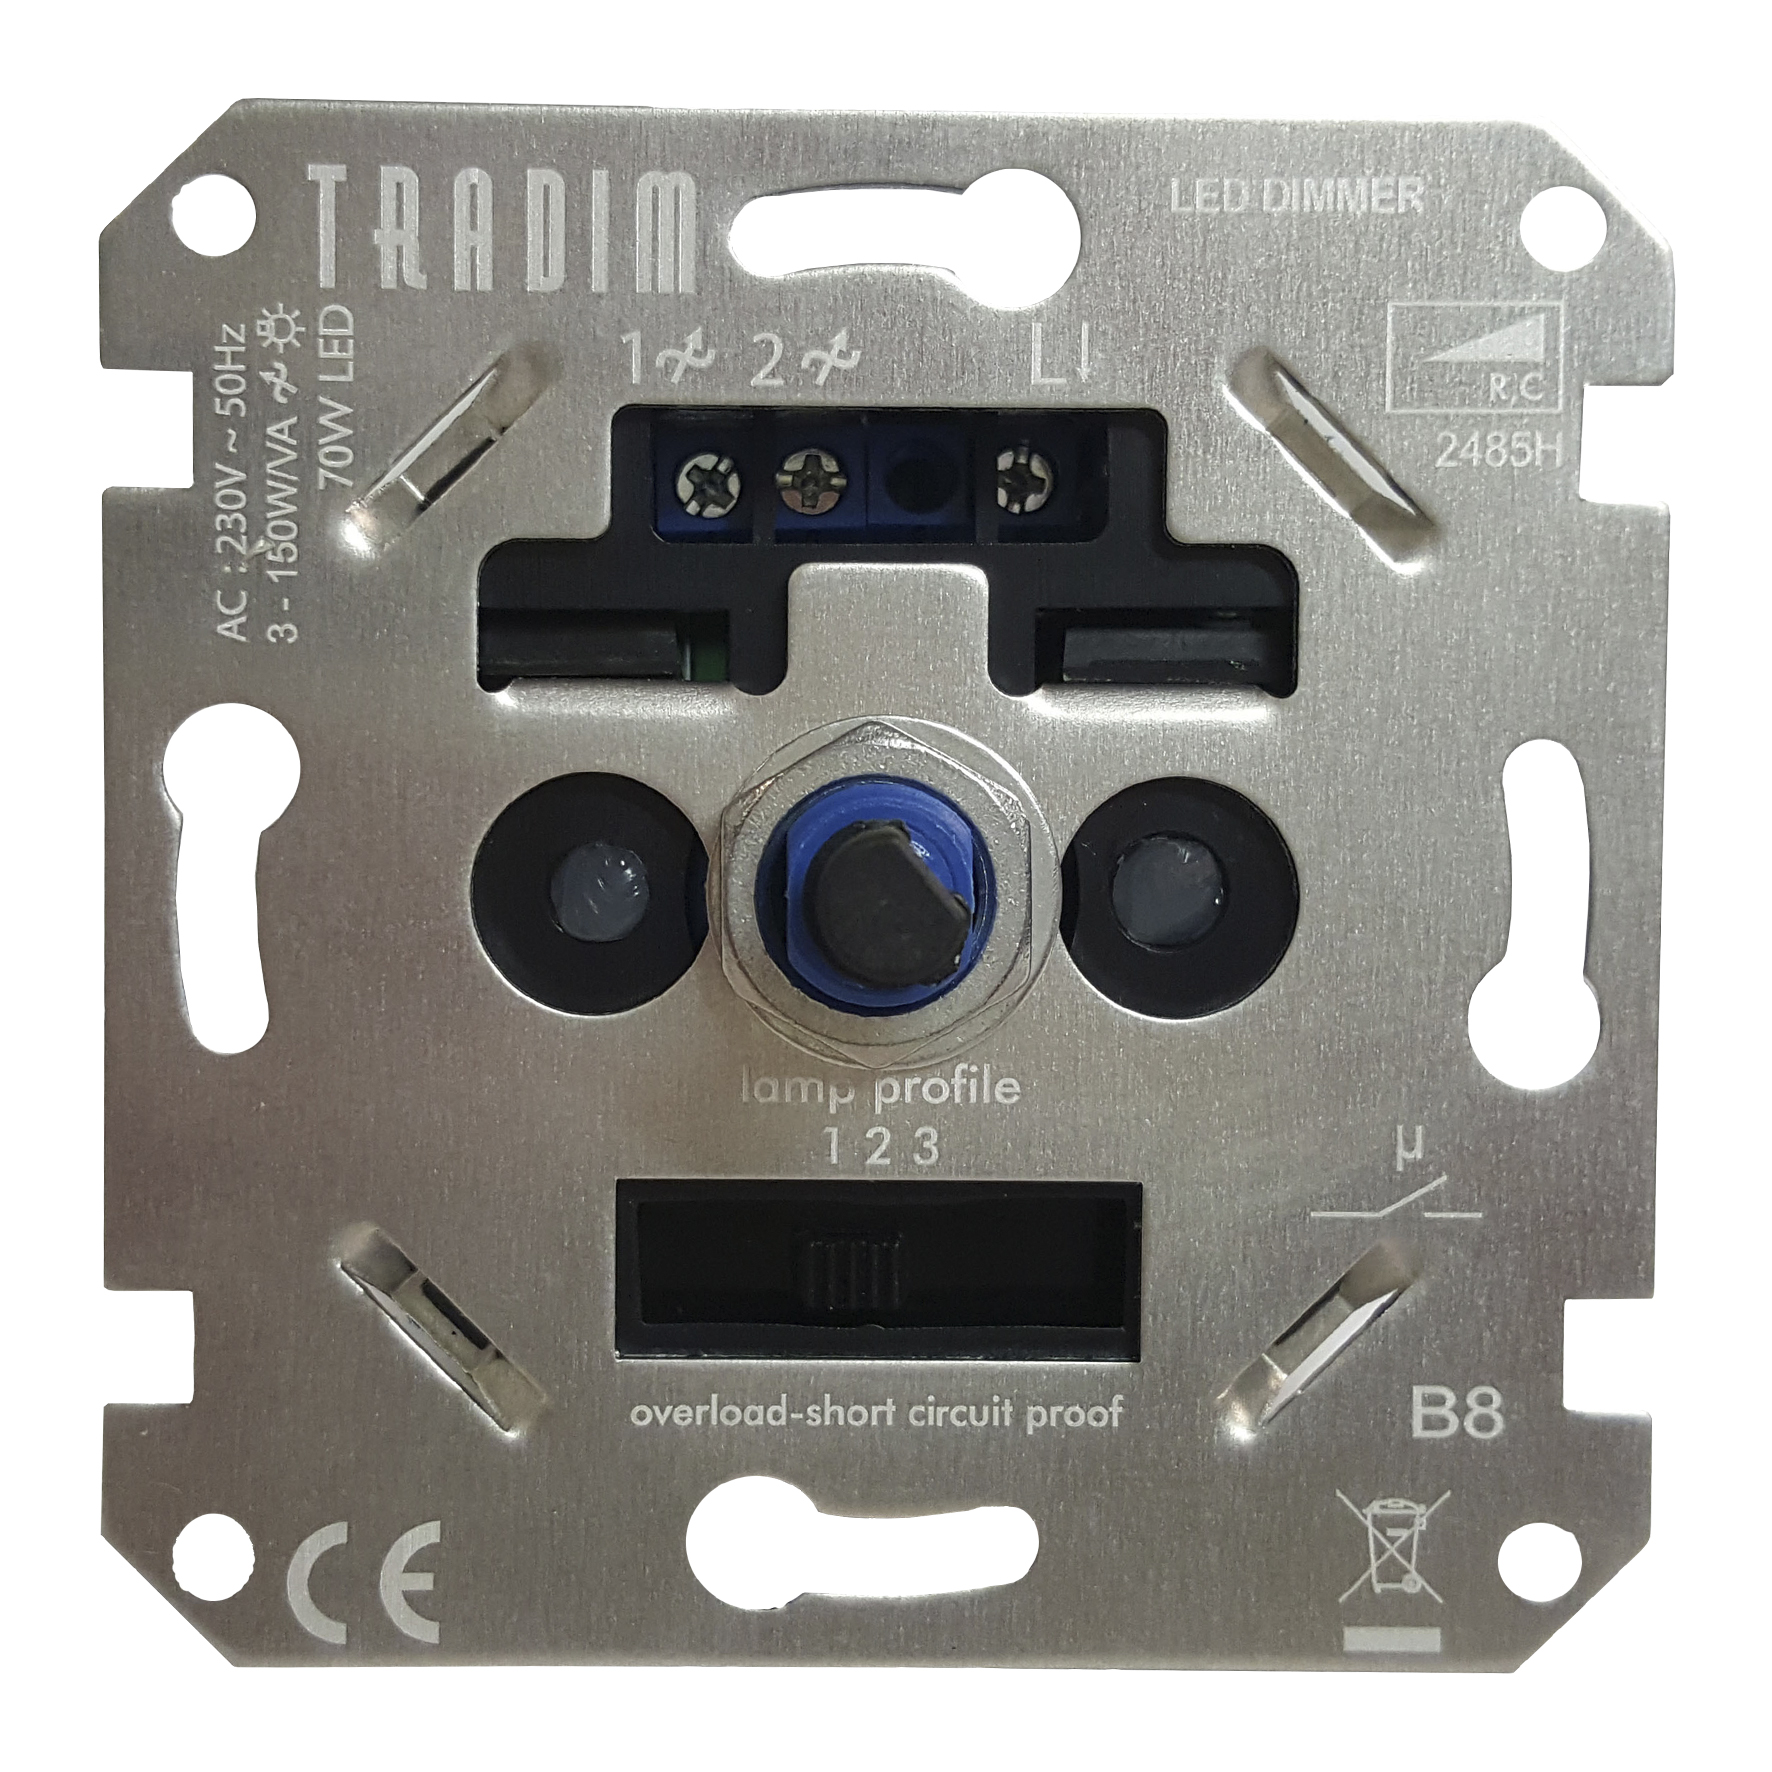 Tradim 2485H LED Tronic Variateur 3-150W 3-profiles